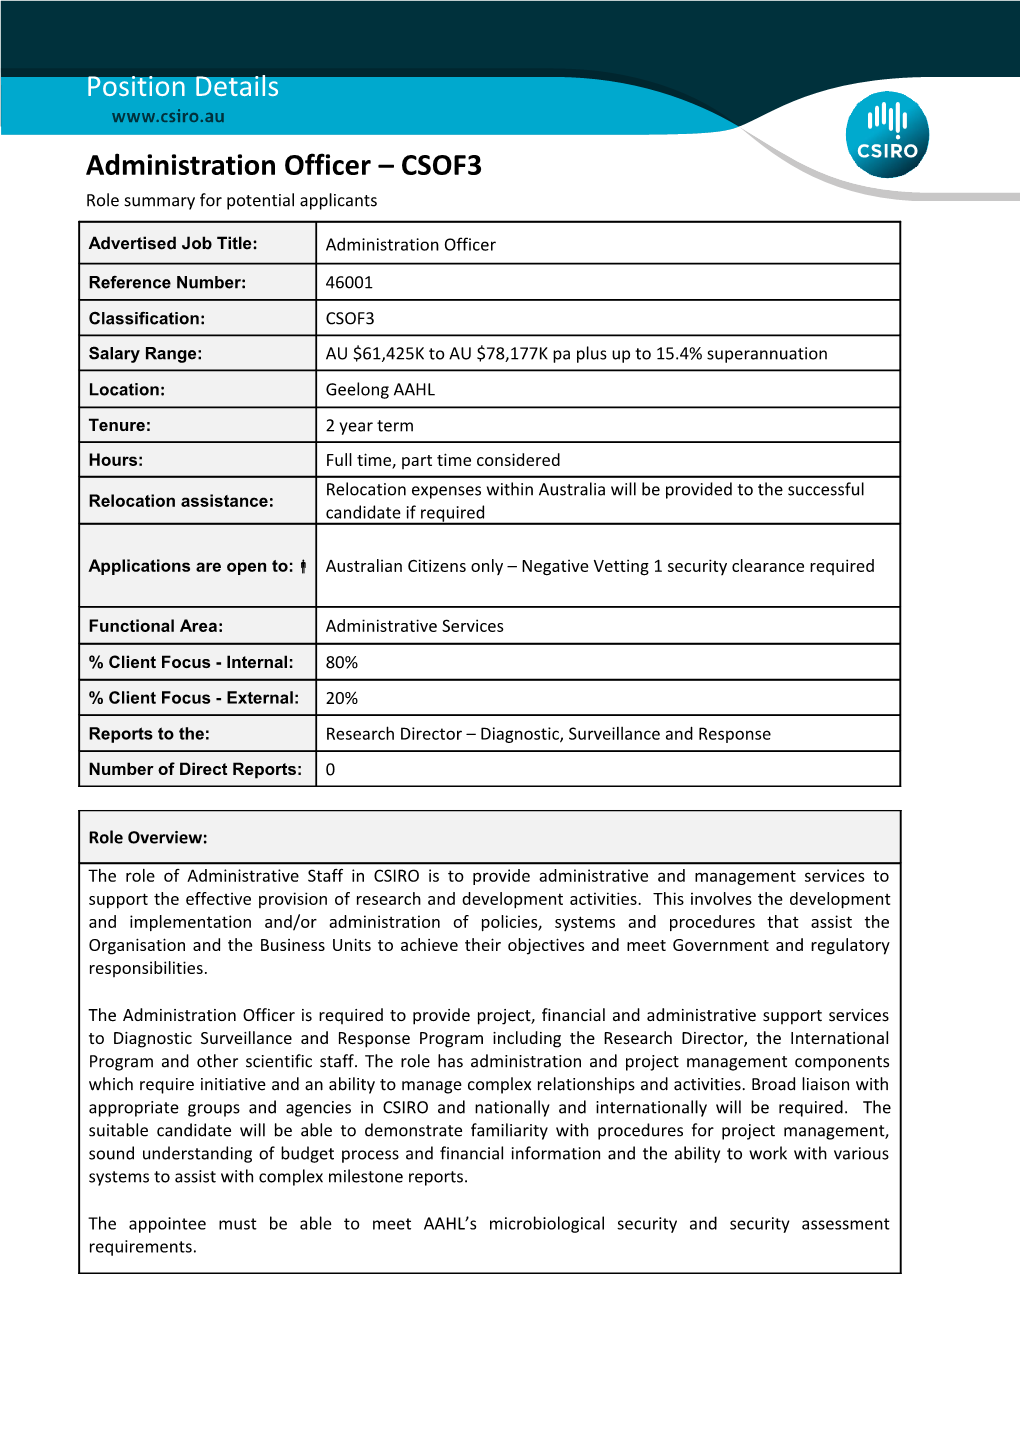 Position Details - Administrative Services - CSOF2